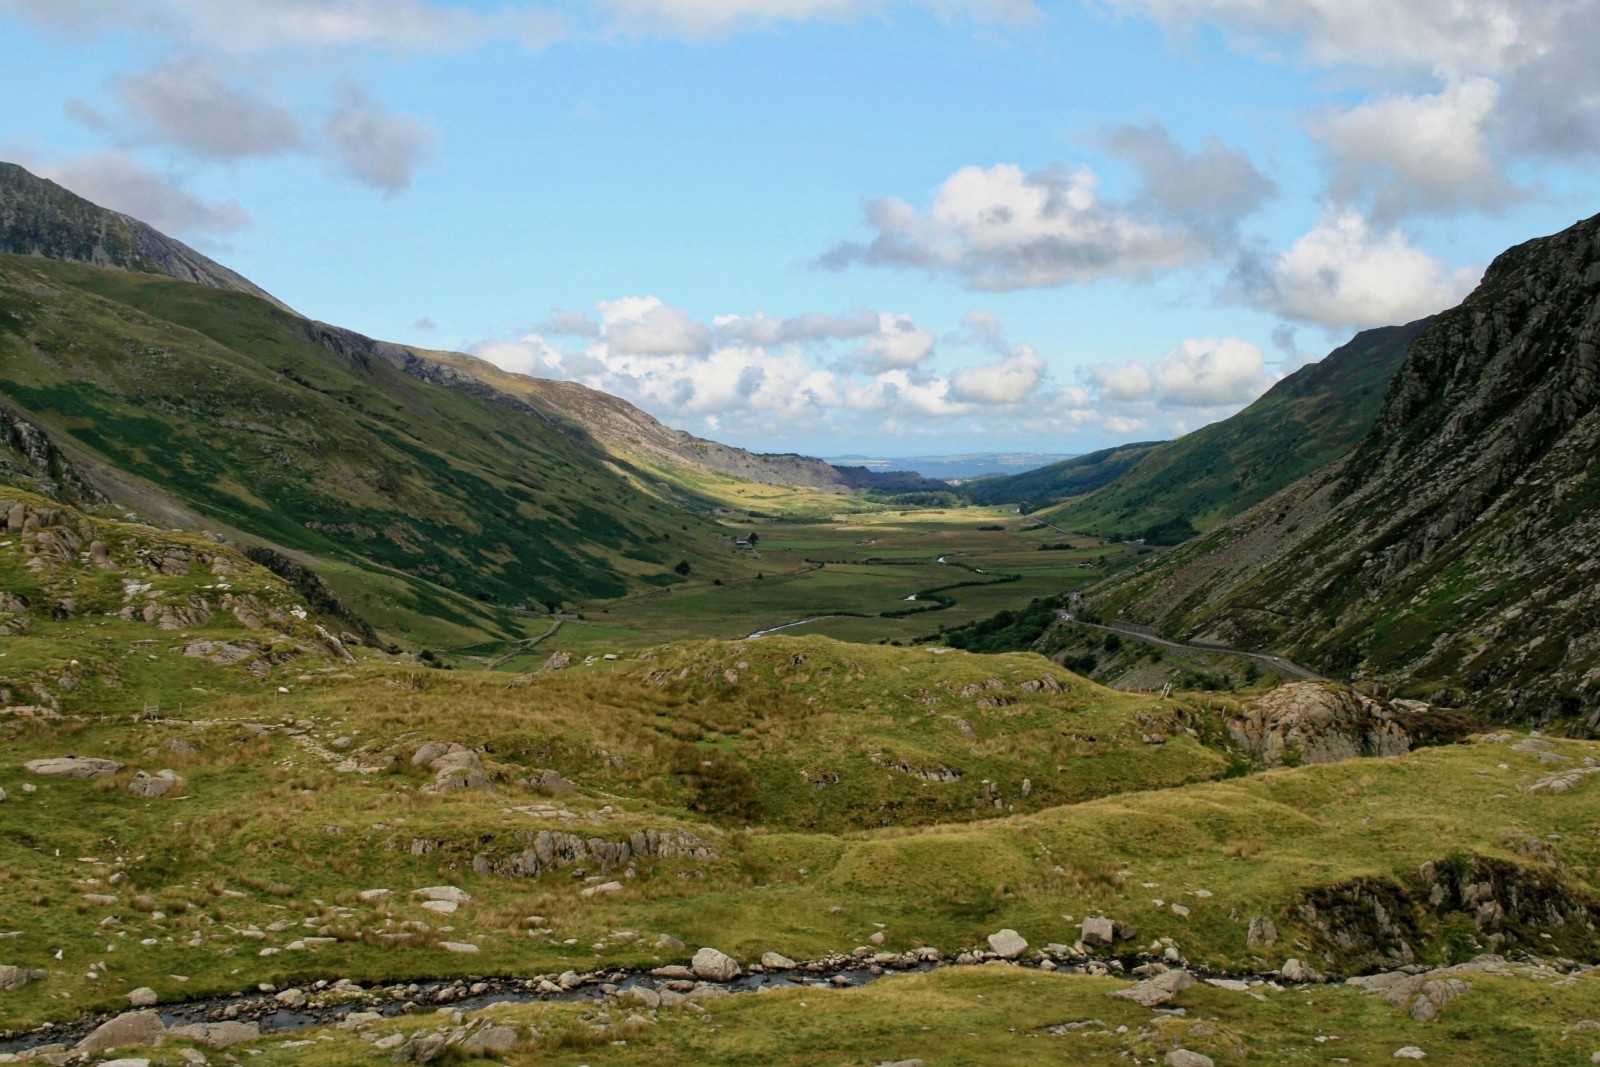 Nant Ffrancon, a u-shaped valley in Snowdonia.